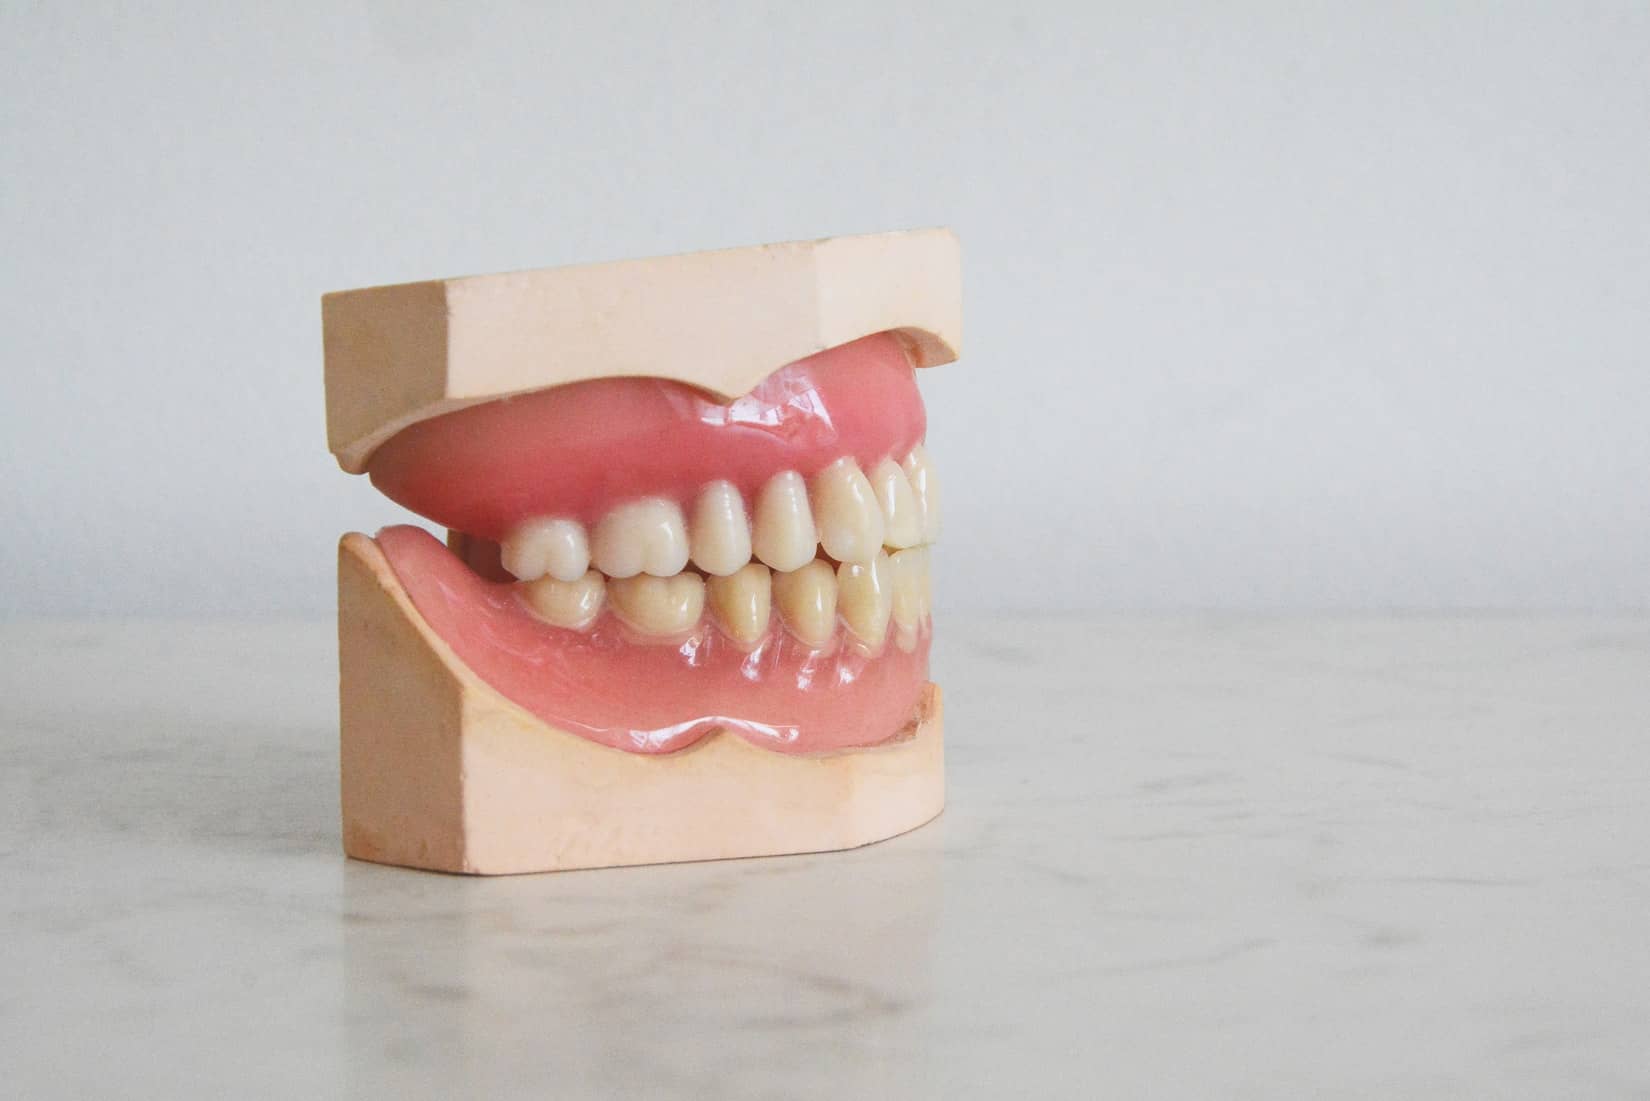 pair of dentures